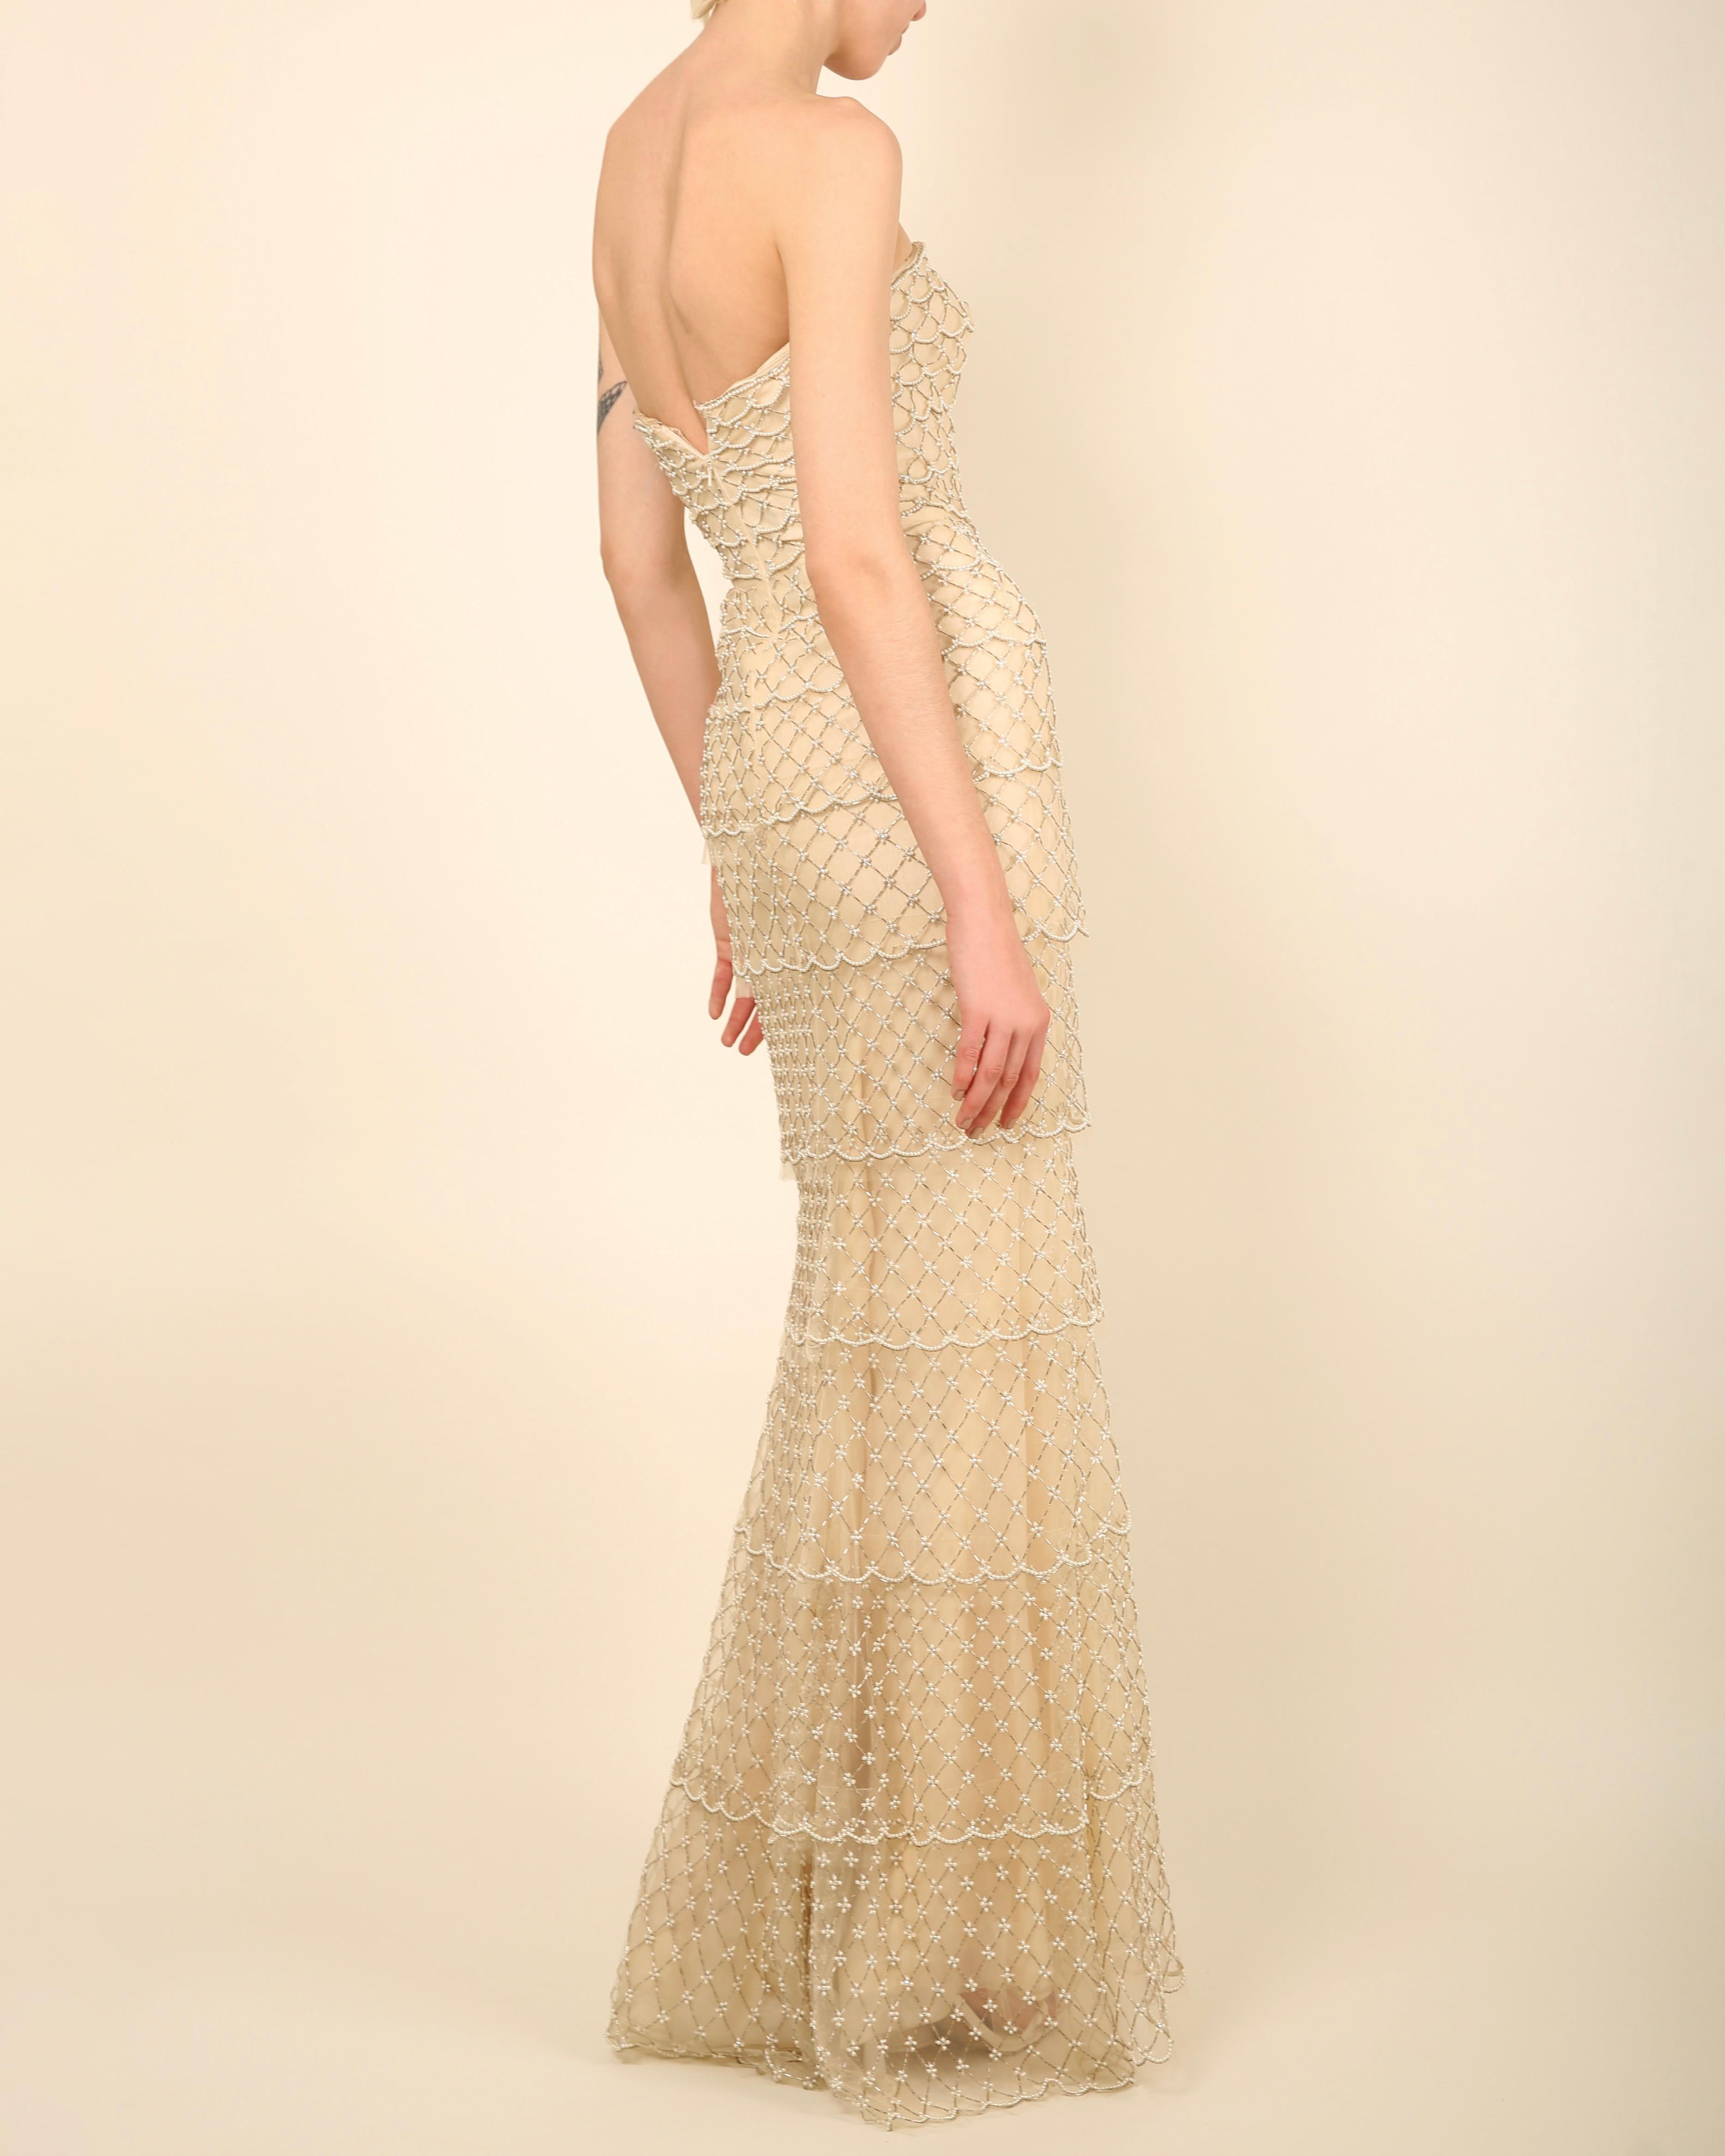 Oscar de la Renta S/S 2014 strapless tiered sheer mesh pearl wedding dress gown For Sale 8